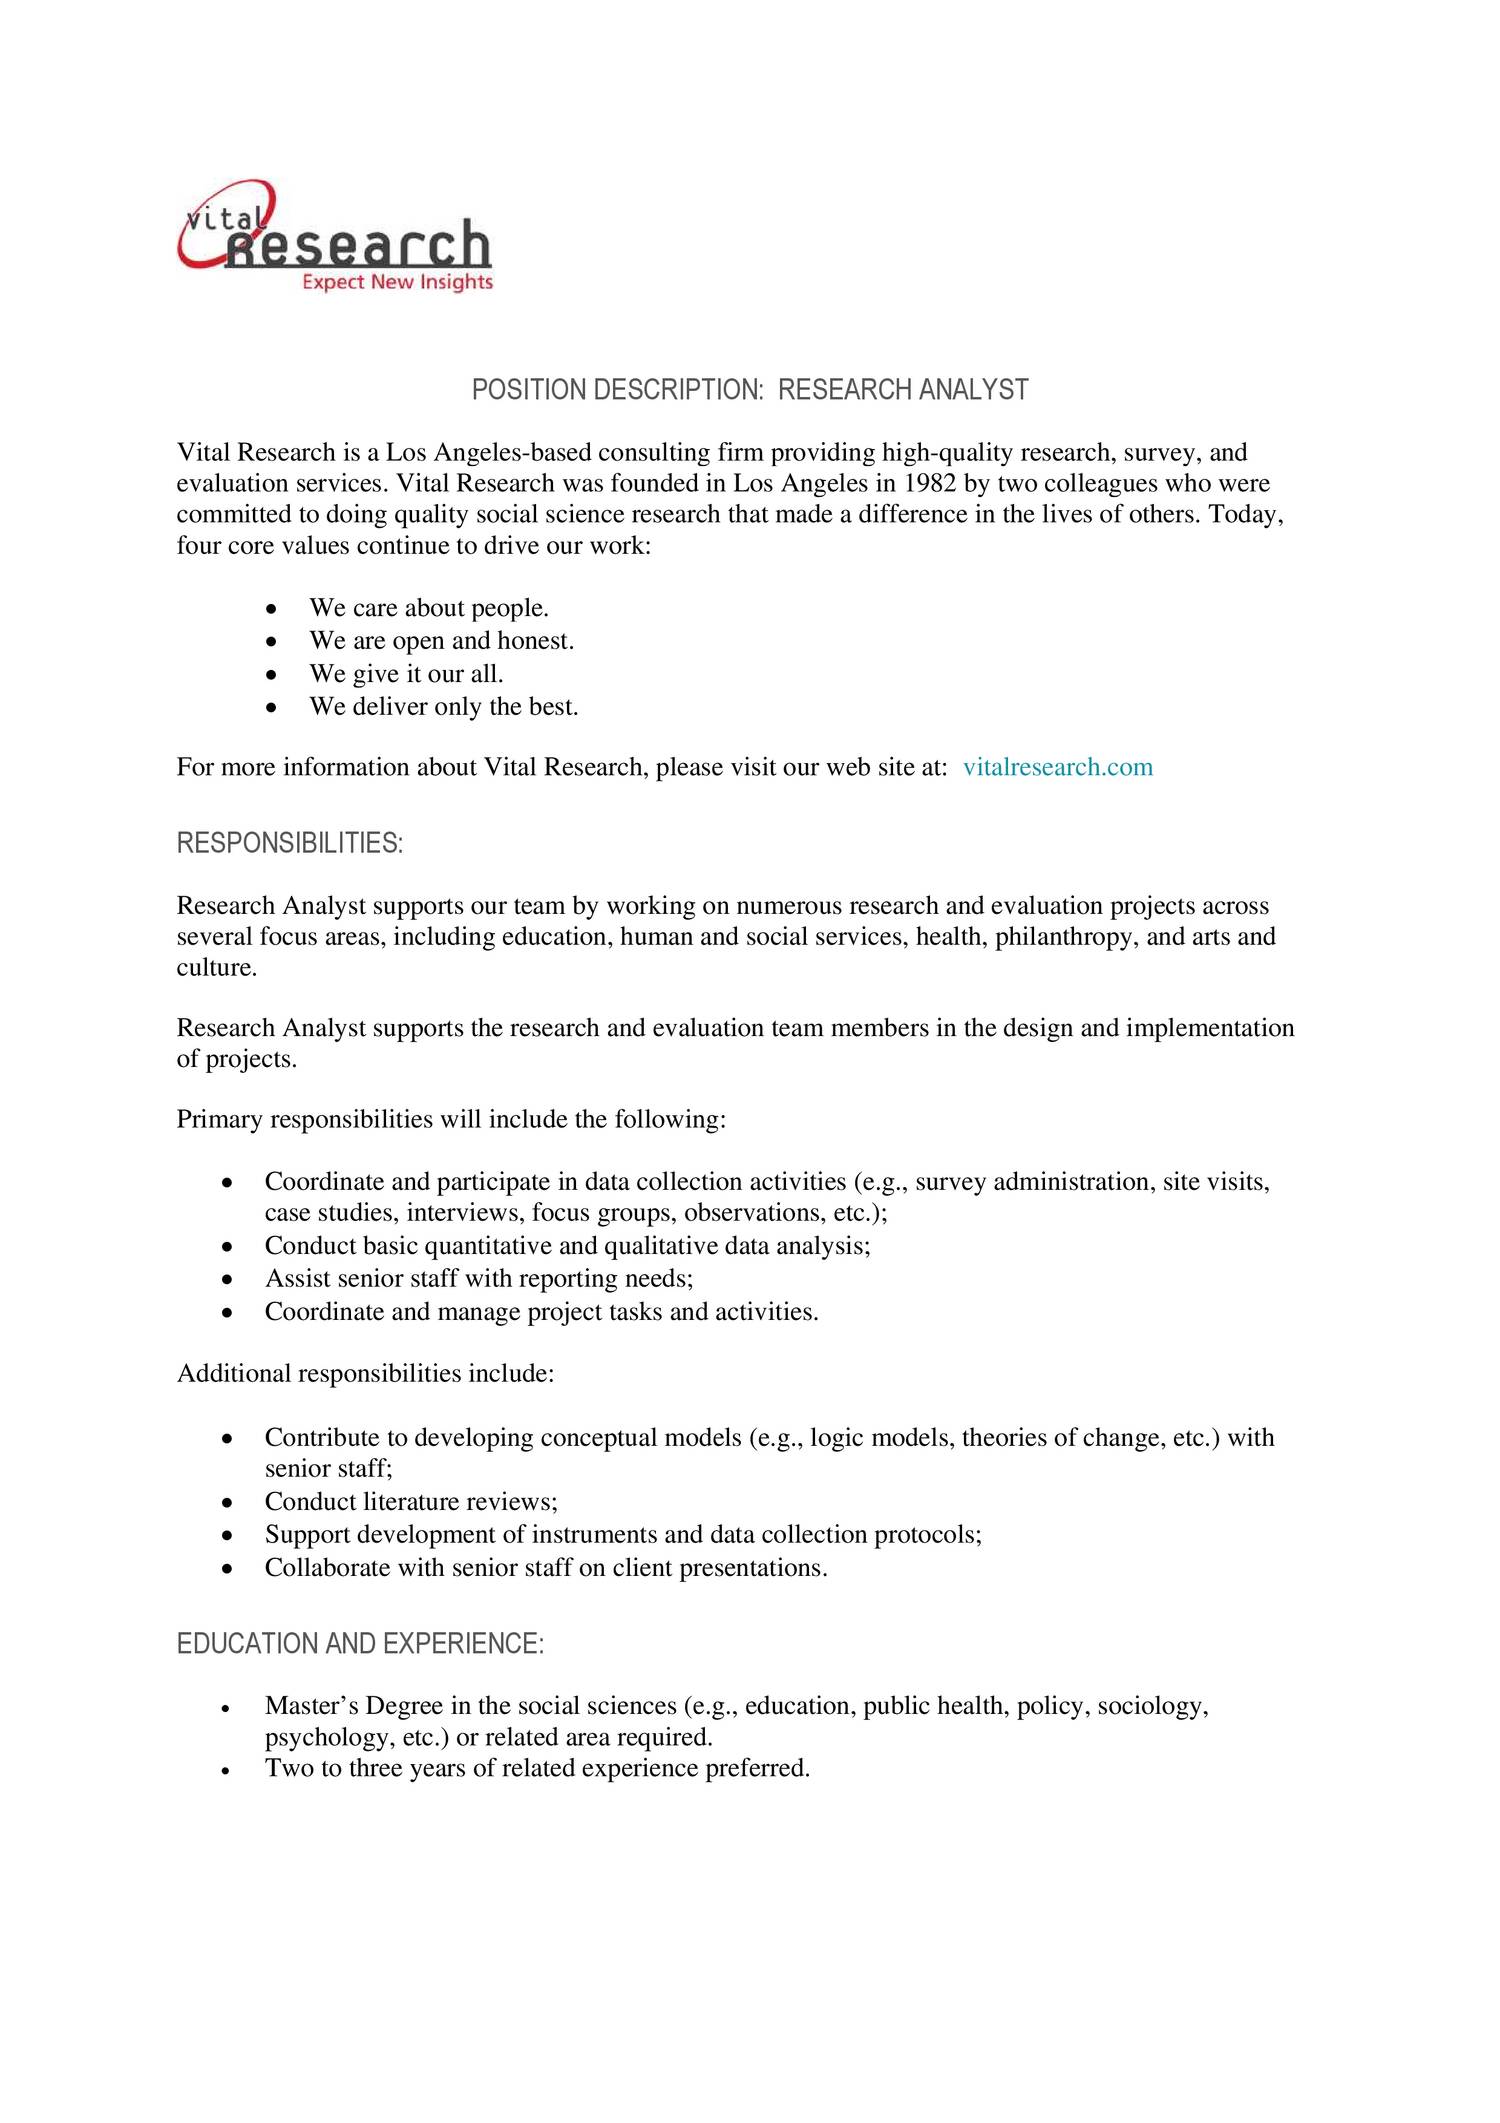 research analyst job description canada